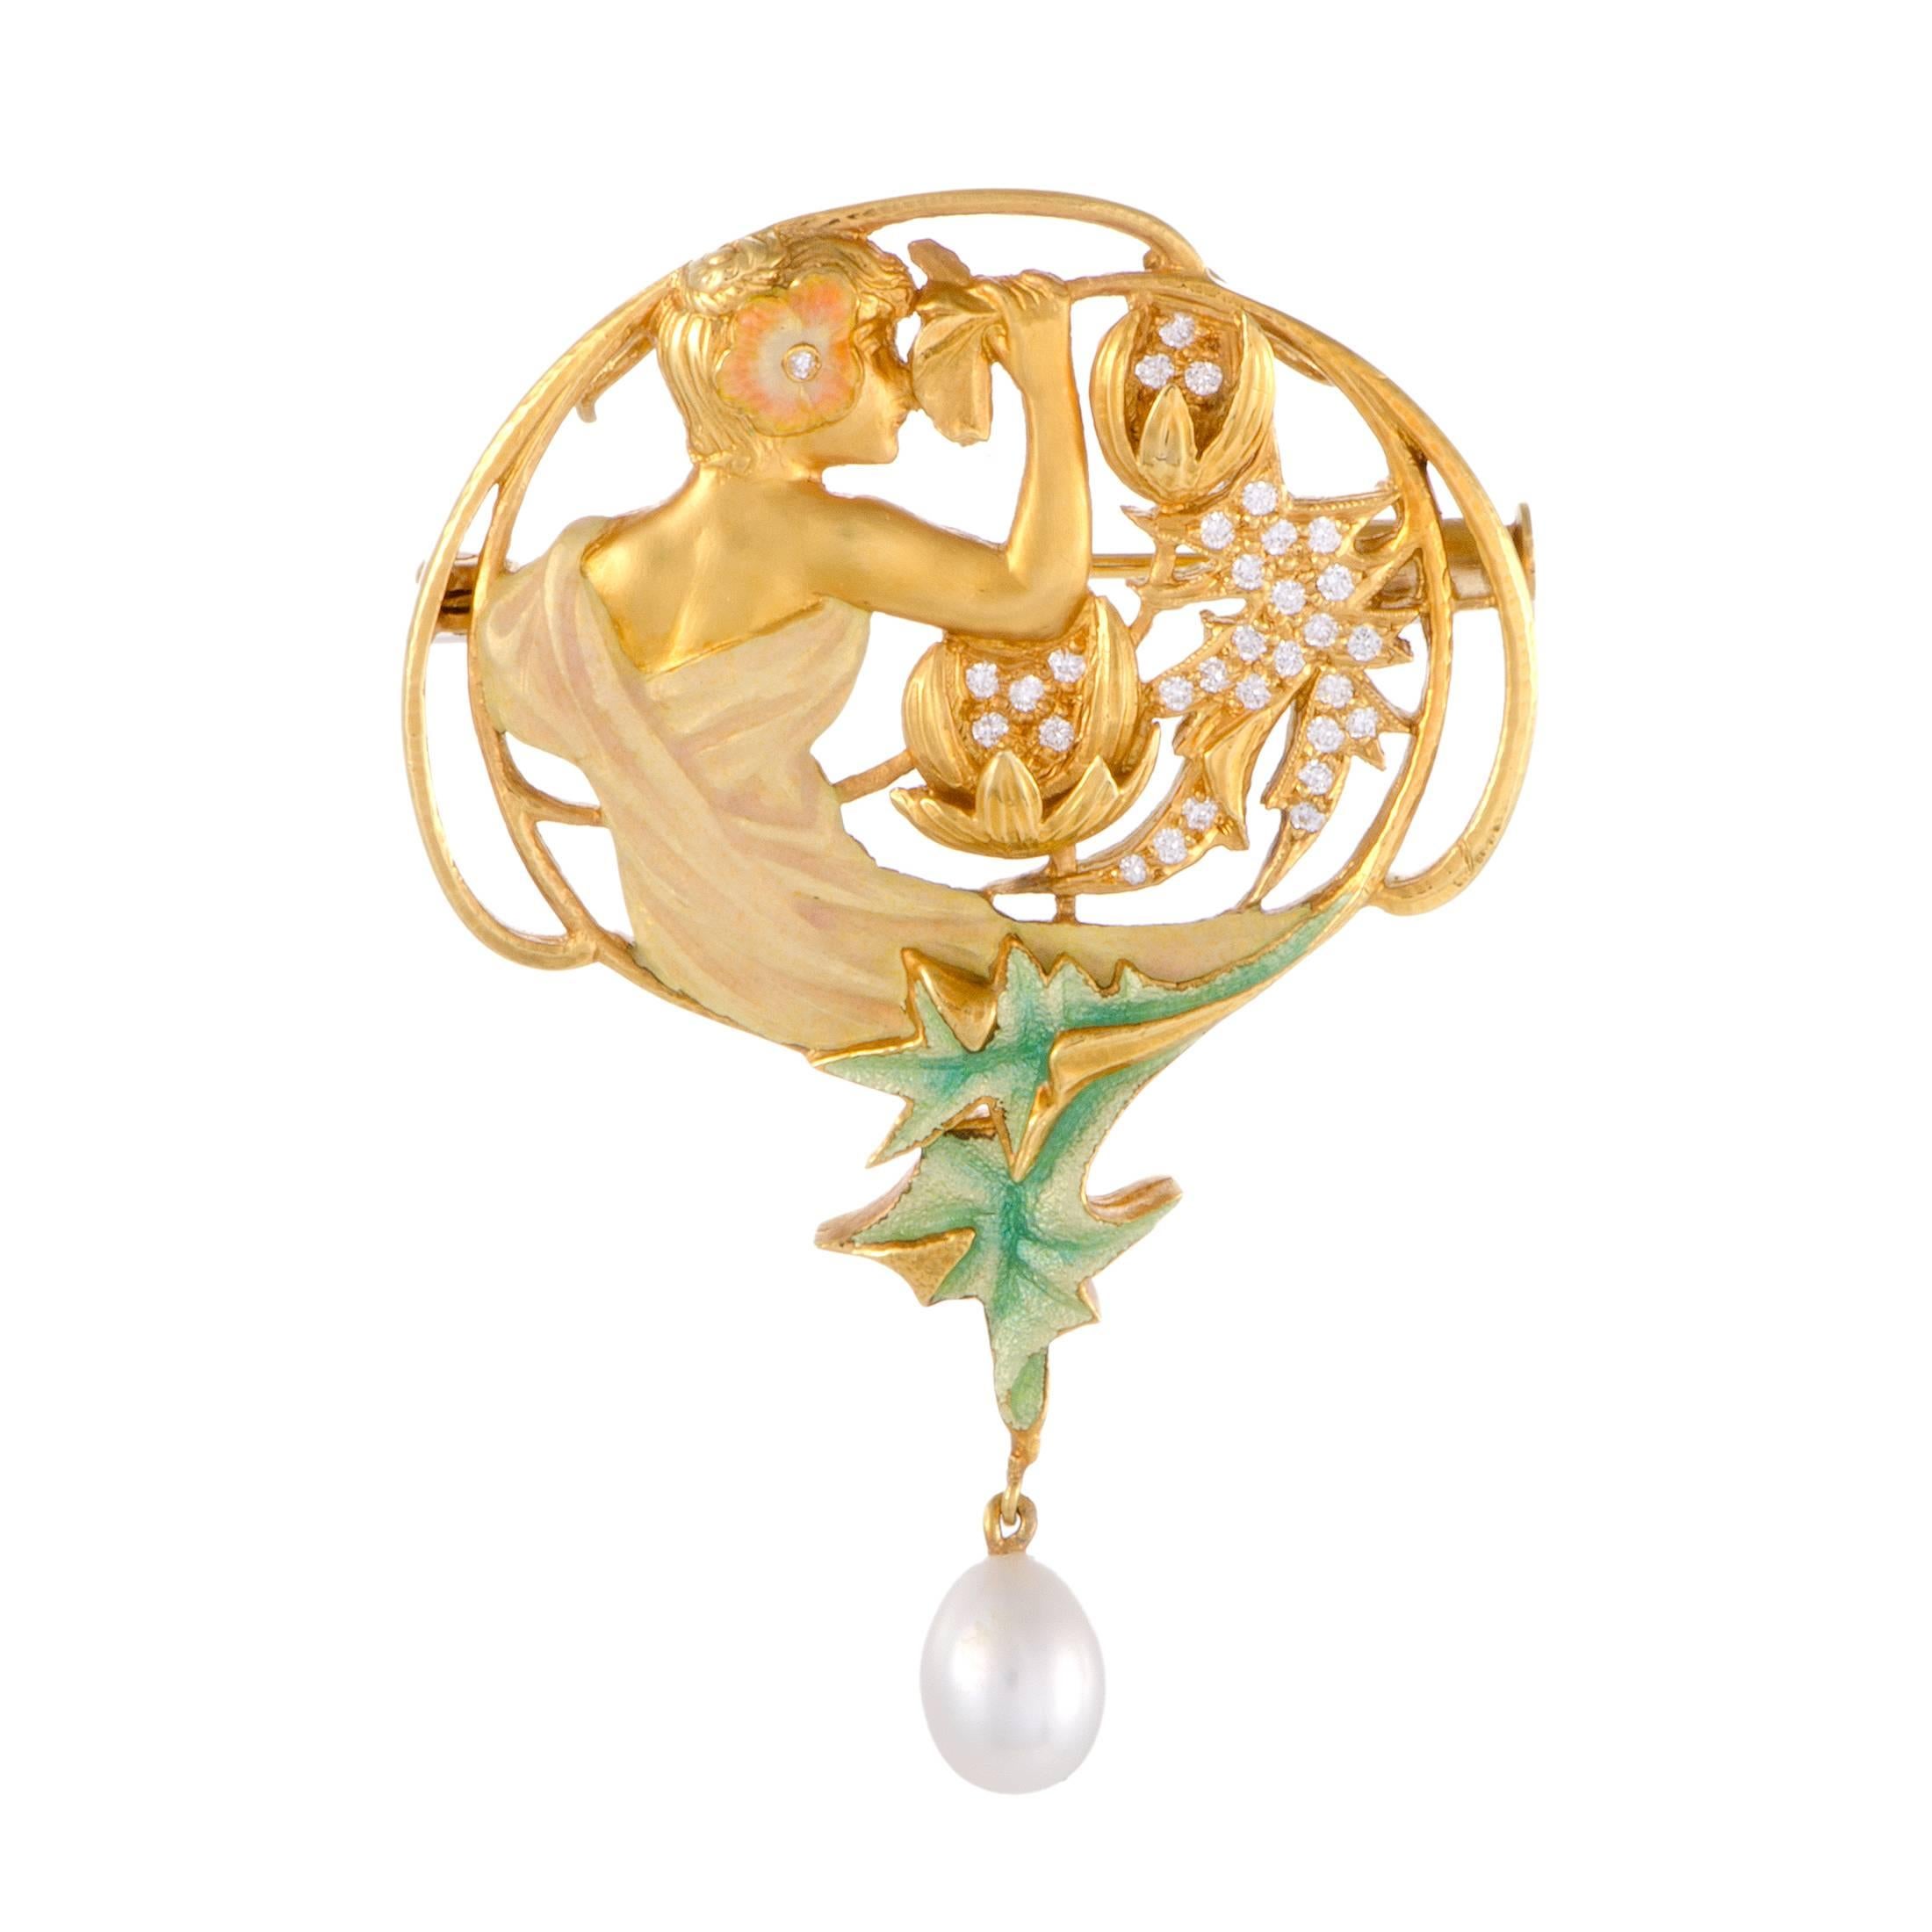 Masriera Diamond and Pearl Yellow Gold Brooch/Pendant